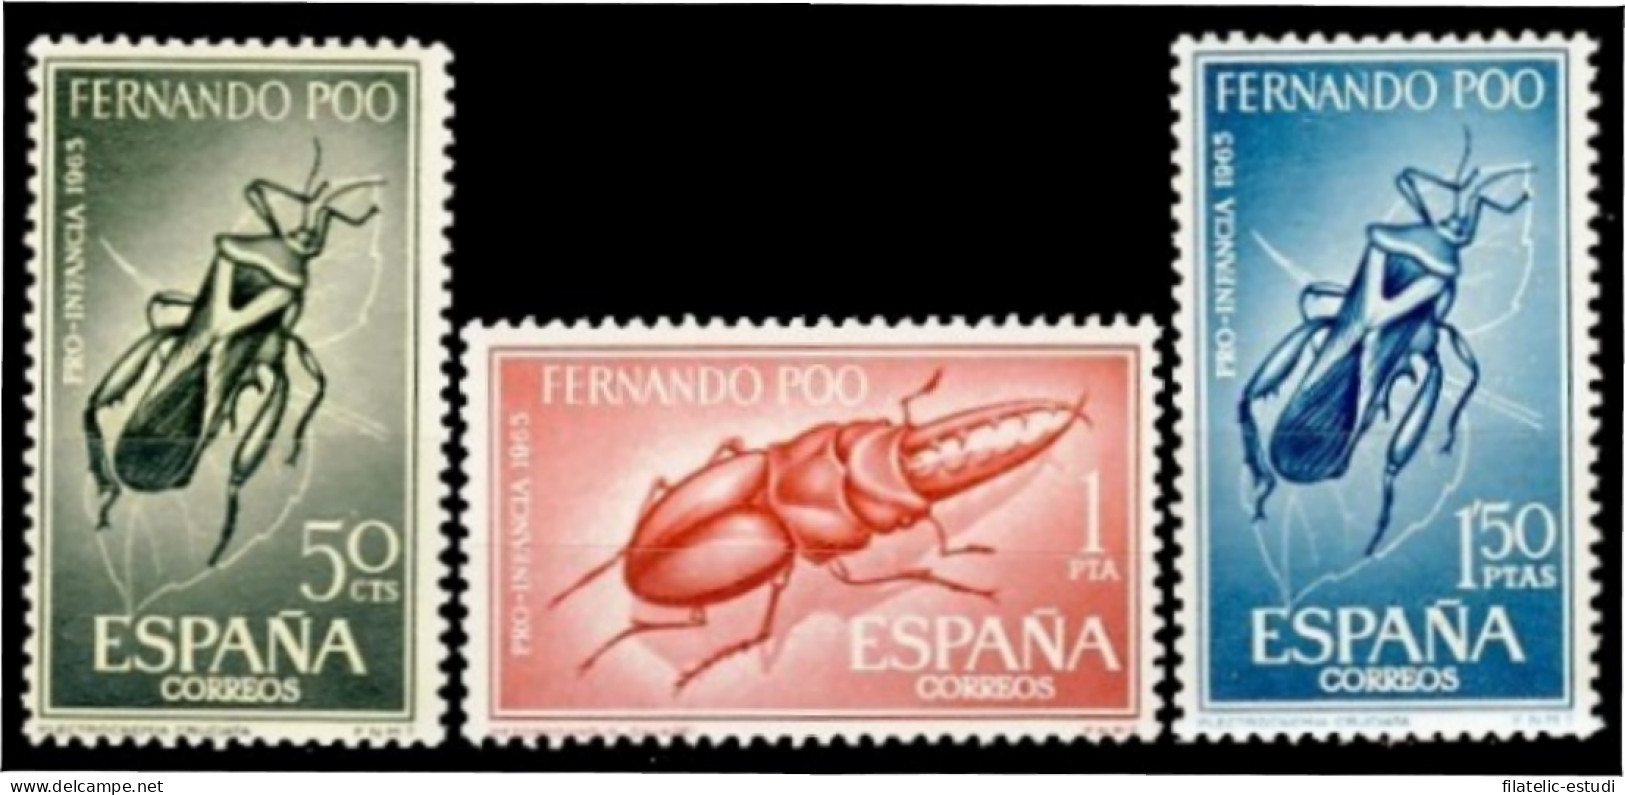 Fernando Poo 242/44 1965 Pro Infancia Insectos MNH - Fernando Poo